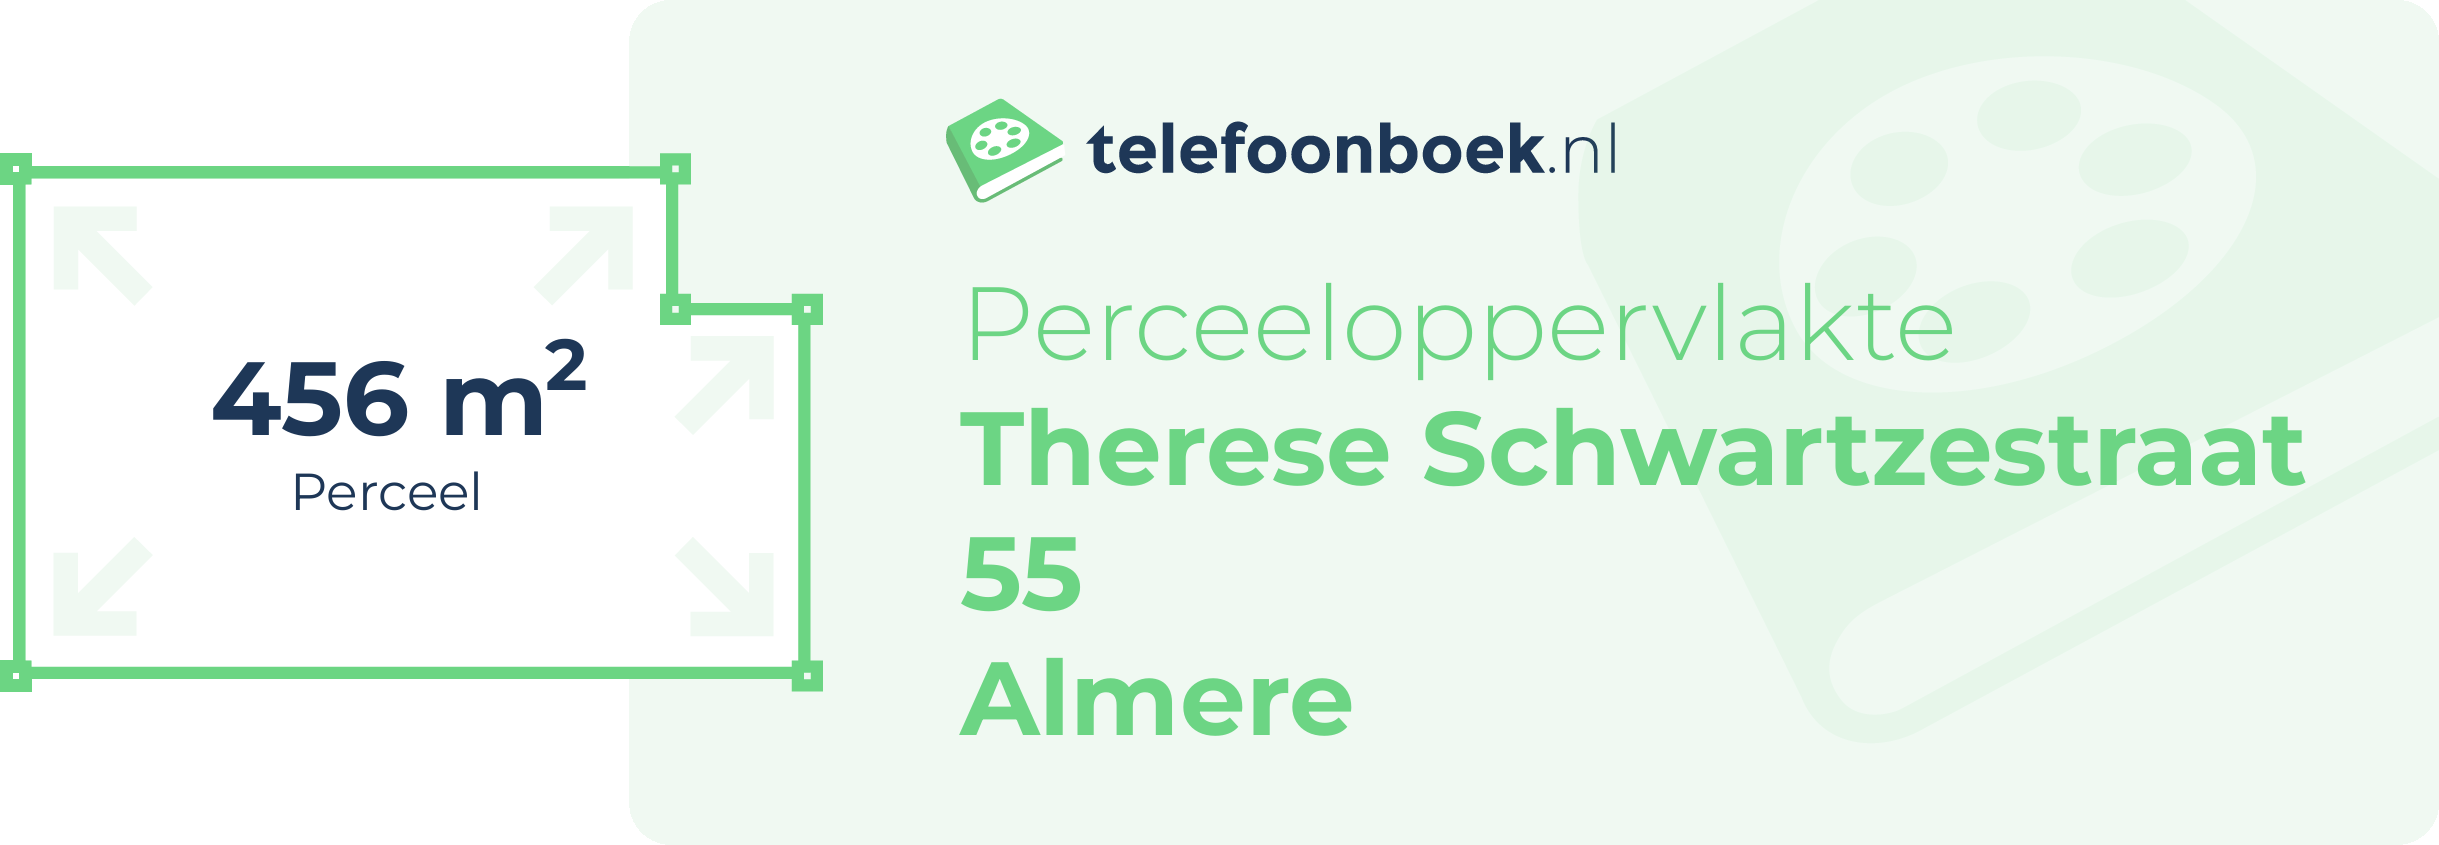 Perceeloppervlakte Therese Schwartzestraat 55 Almere